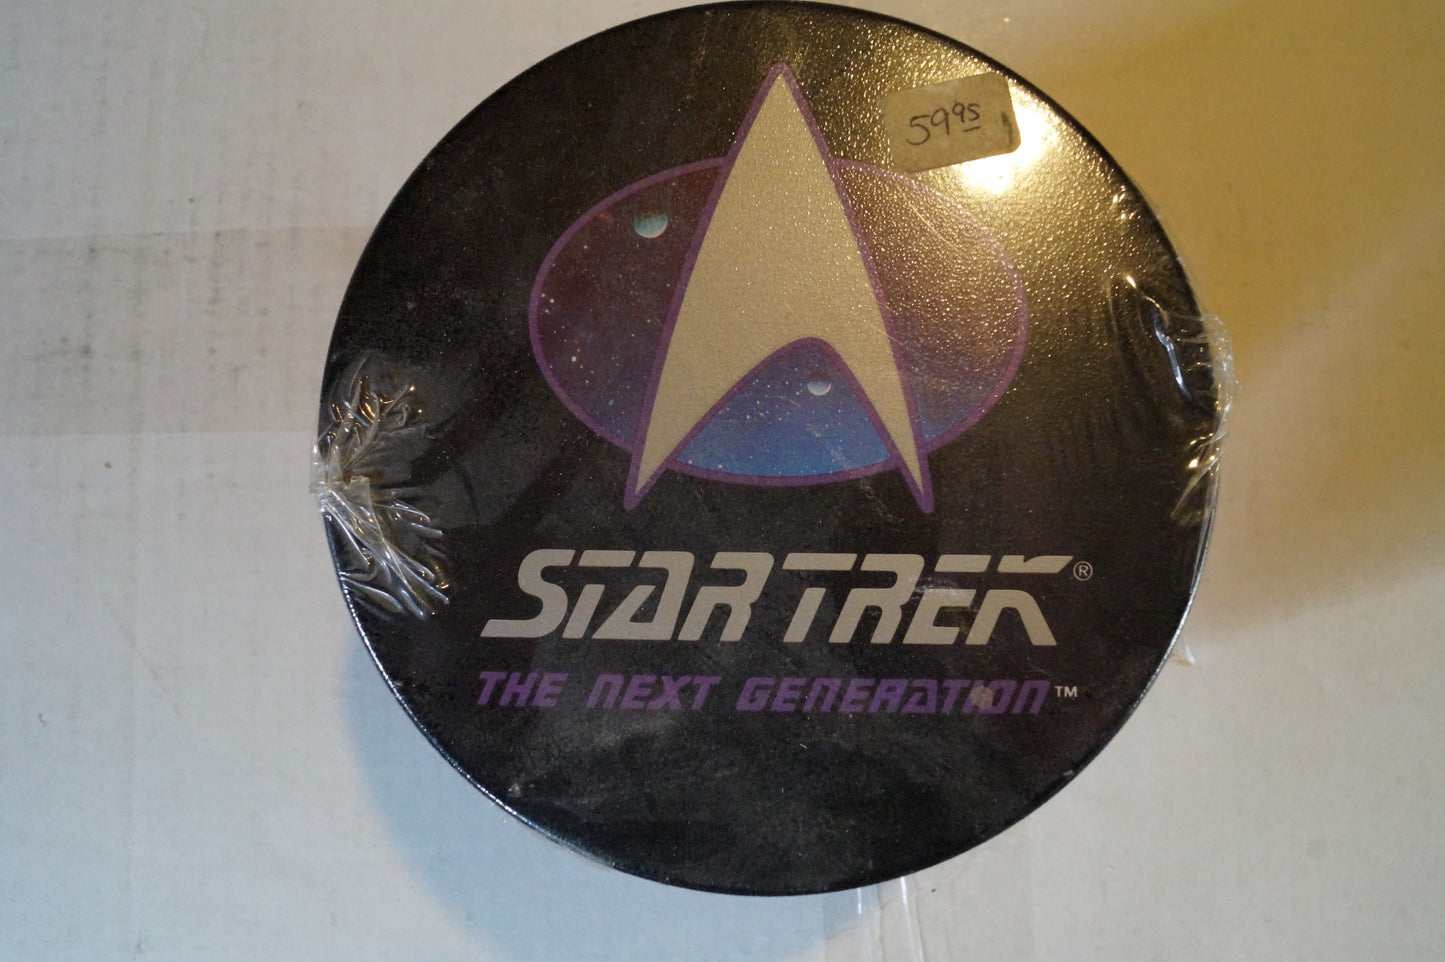 Star Trek The Next Generation Collector Card Tin inaugural set 1992